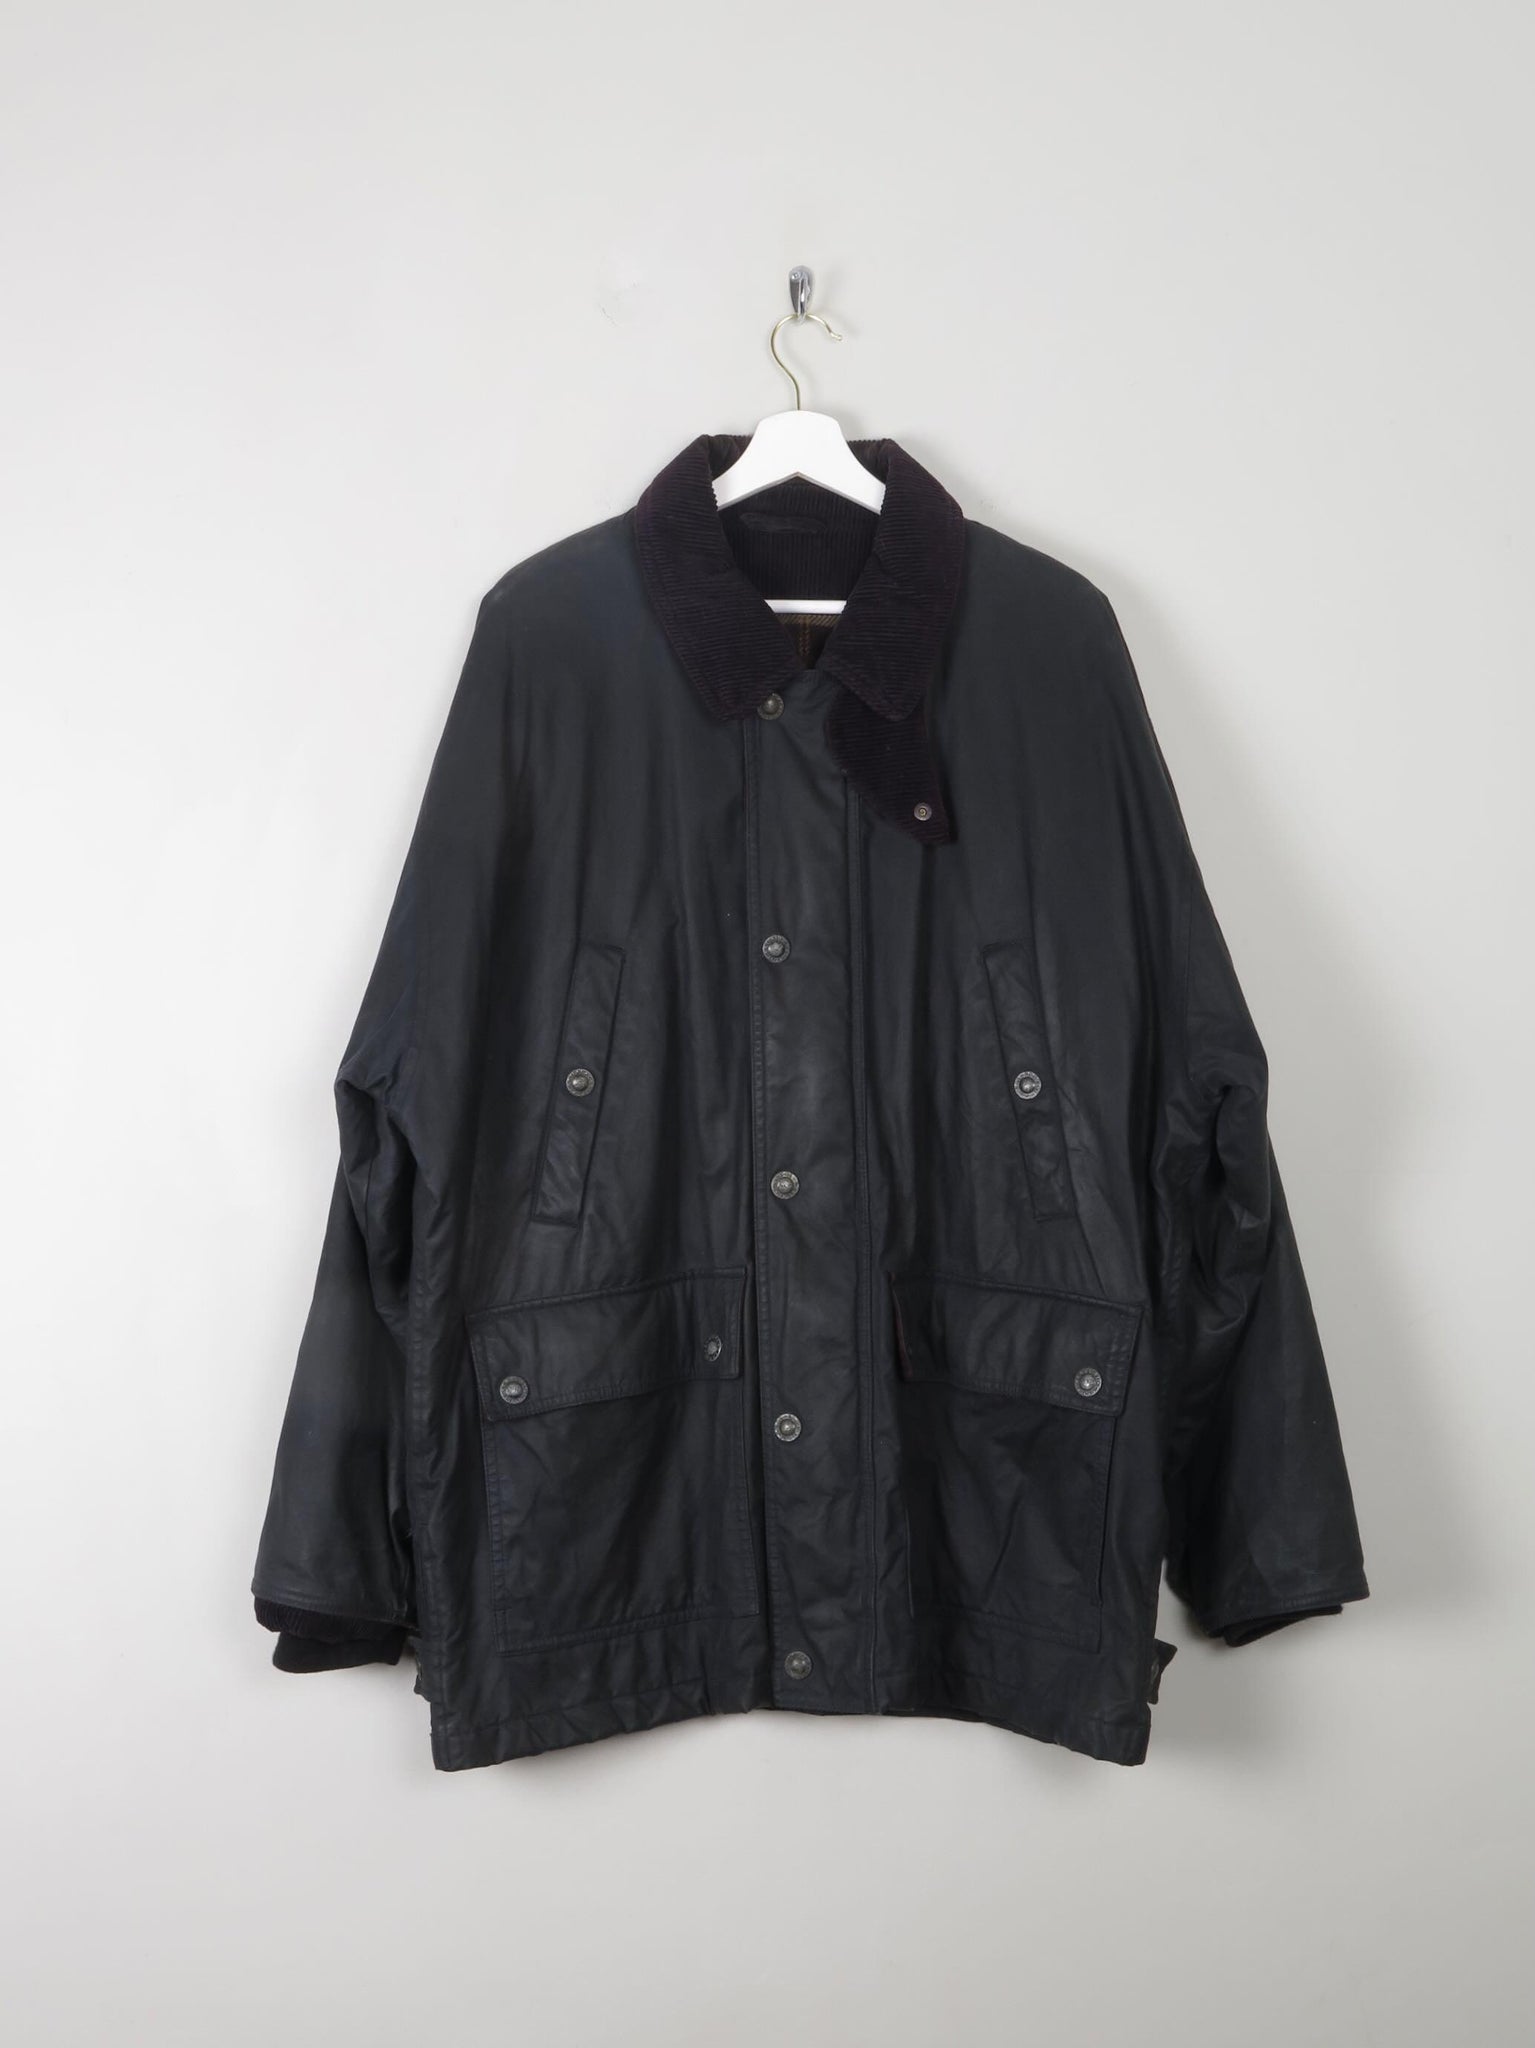 Men's Vintage Lined Wax Jacket Navy XL - The Harlequin